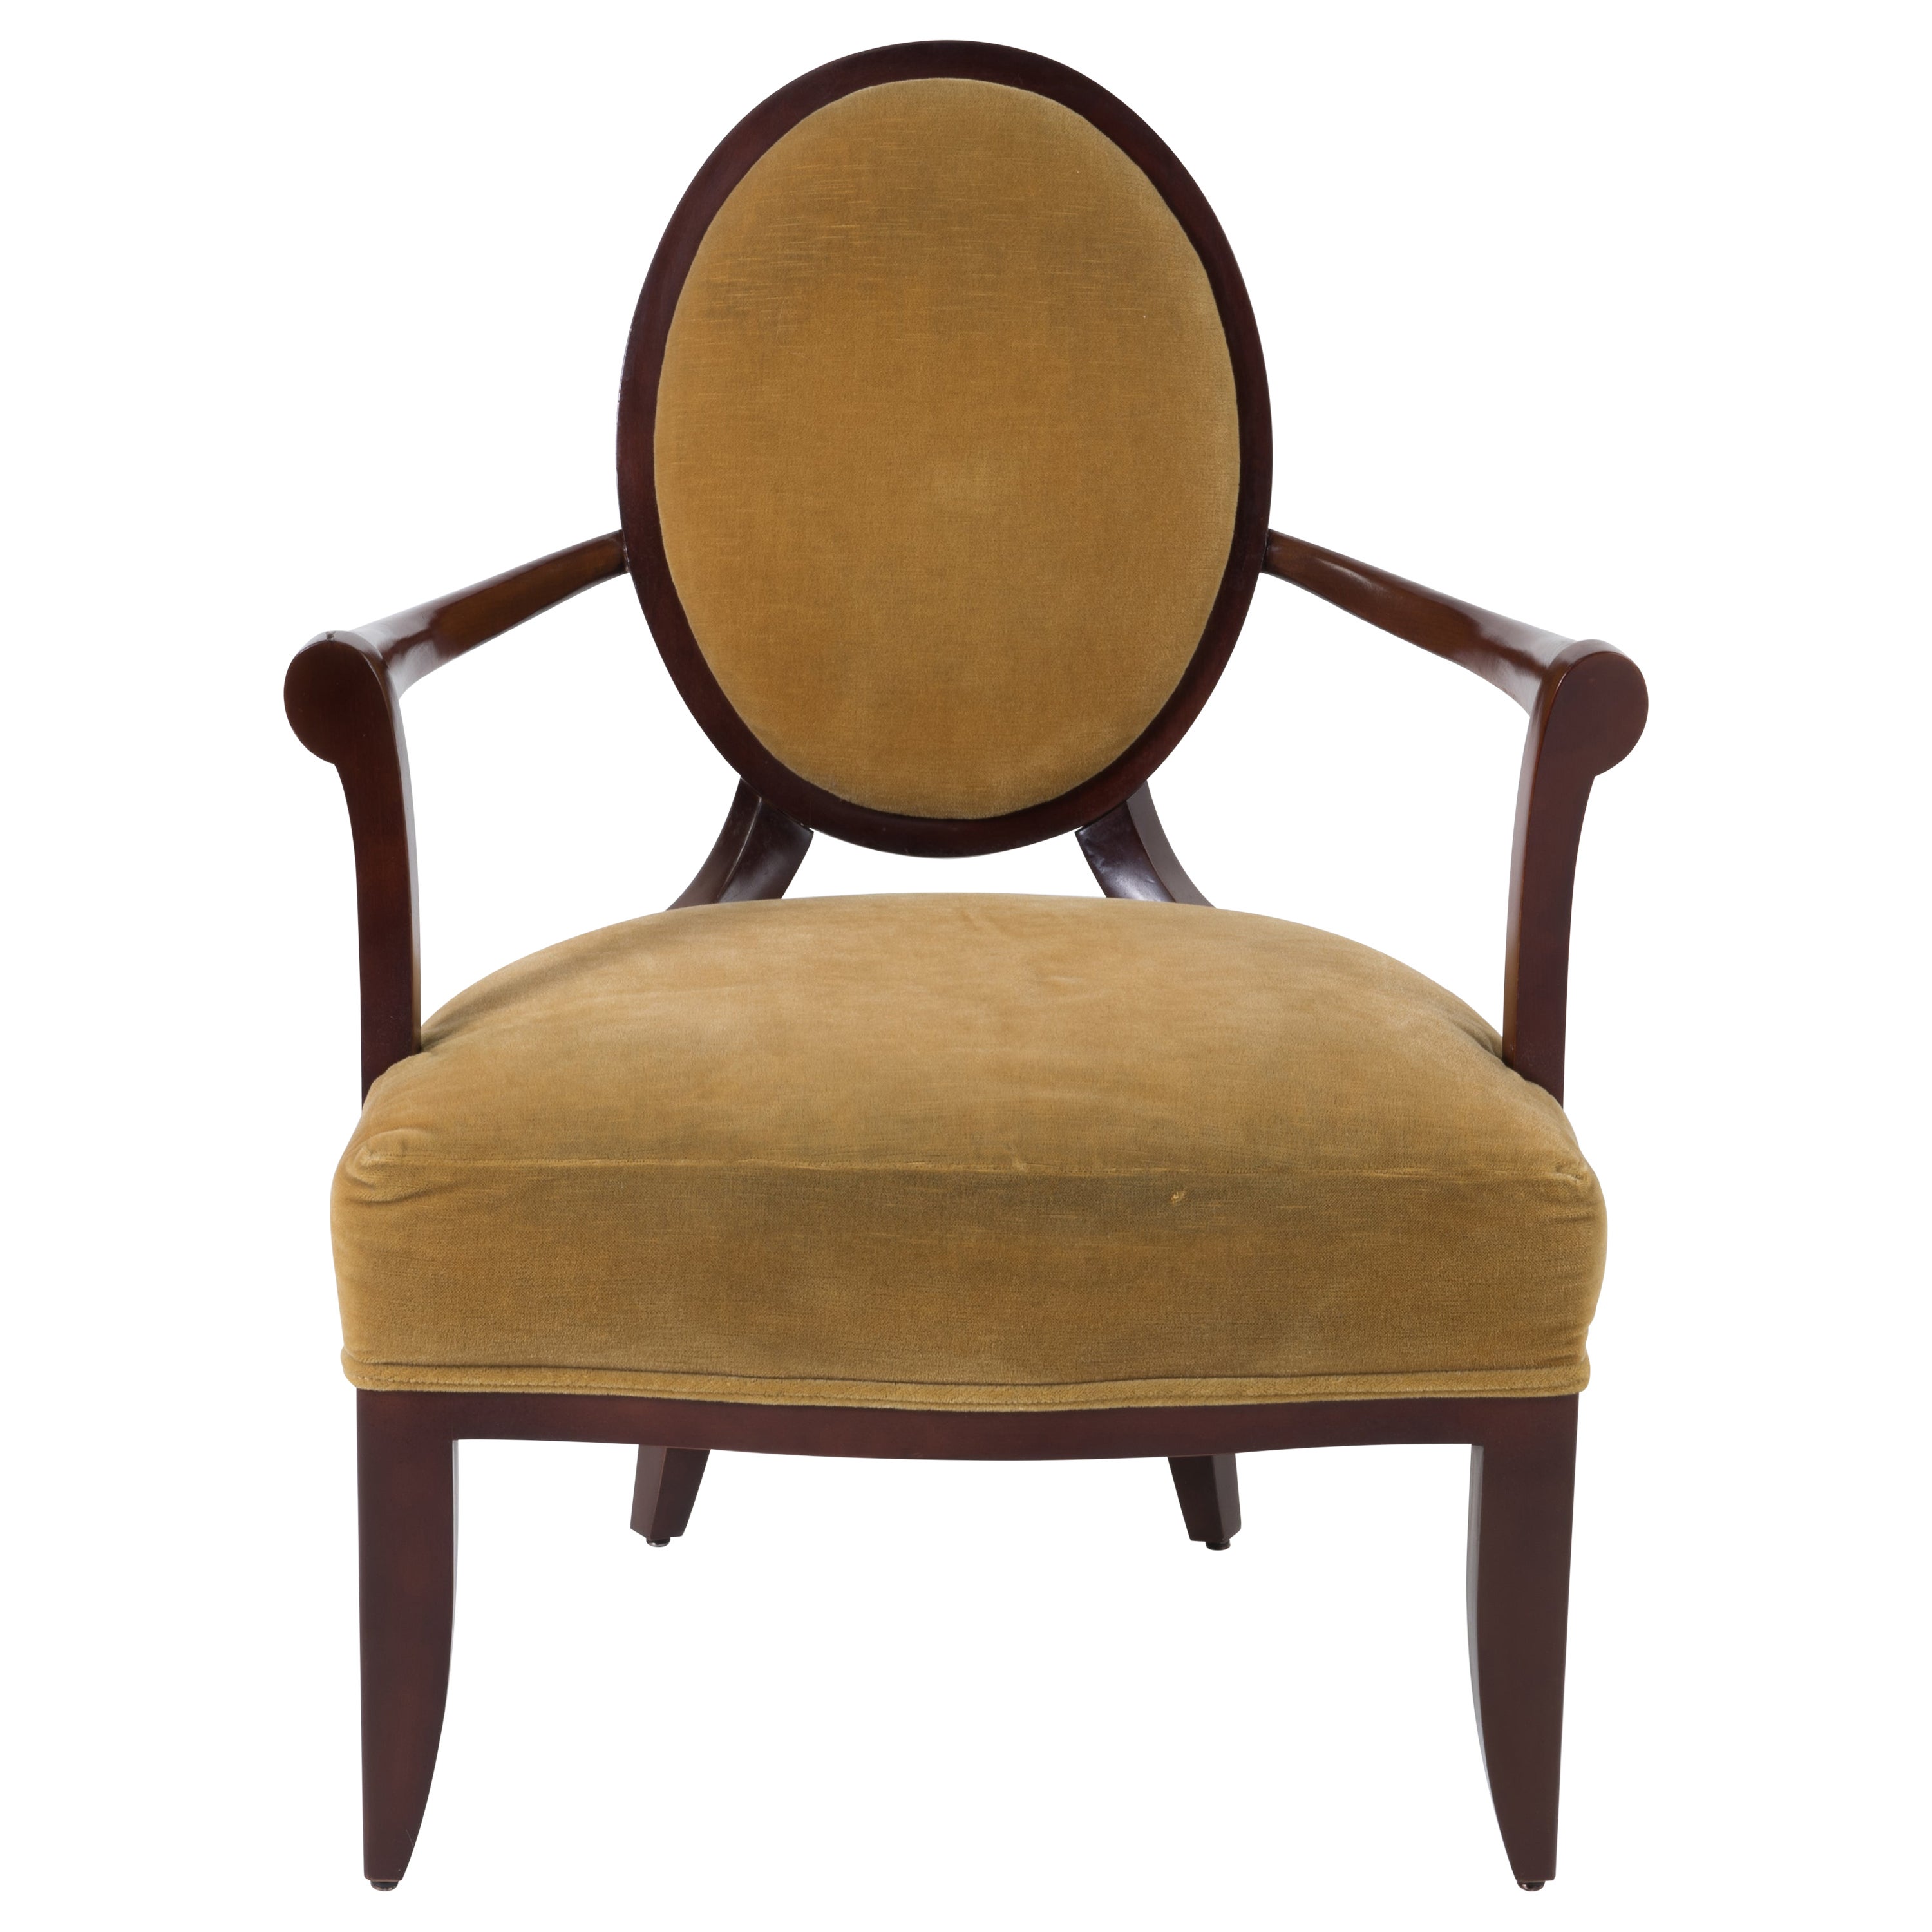 Sumptuous Barbara Barry Regency Style Mahogany Arm Chair